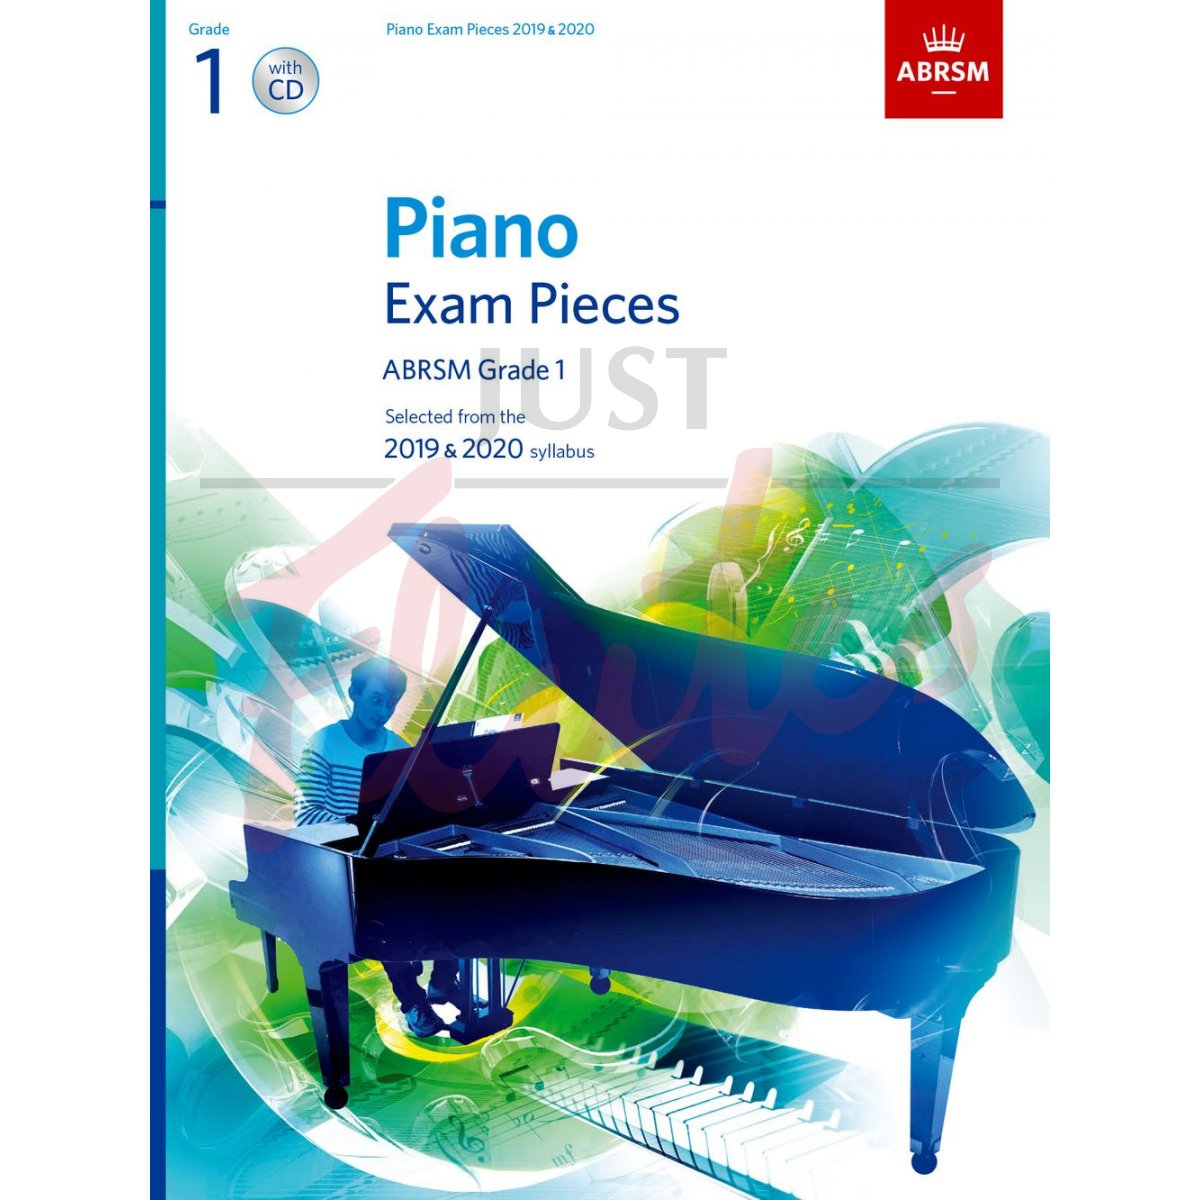 Piano Exam Pieces 2019-2020, Grade 1